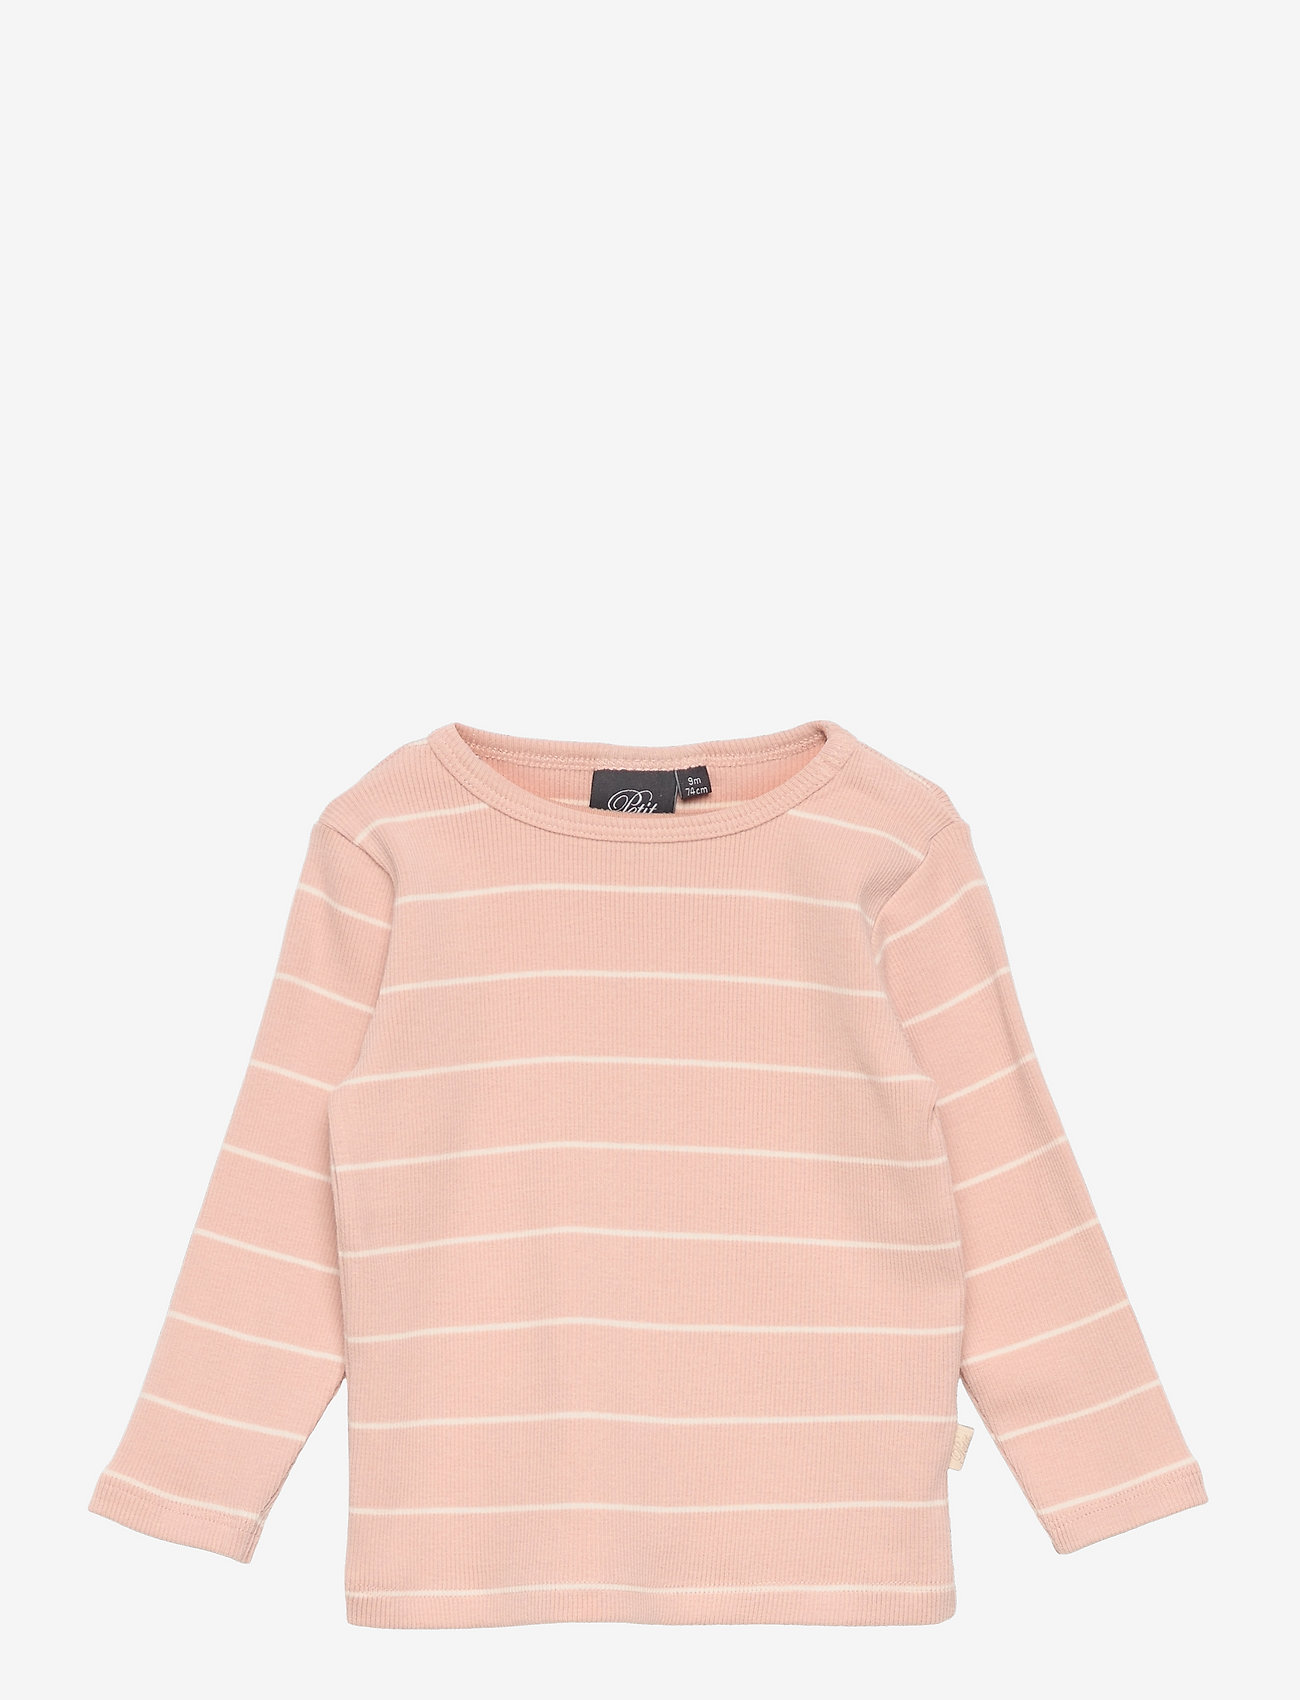 Sofie Schnoor Baby and Kids - T-shirt long-sleeve - langärmelige - light rose - 0